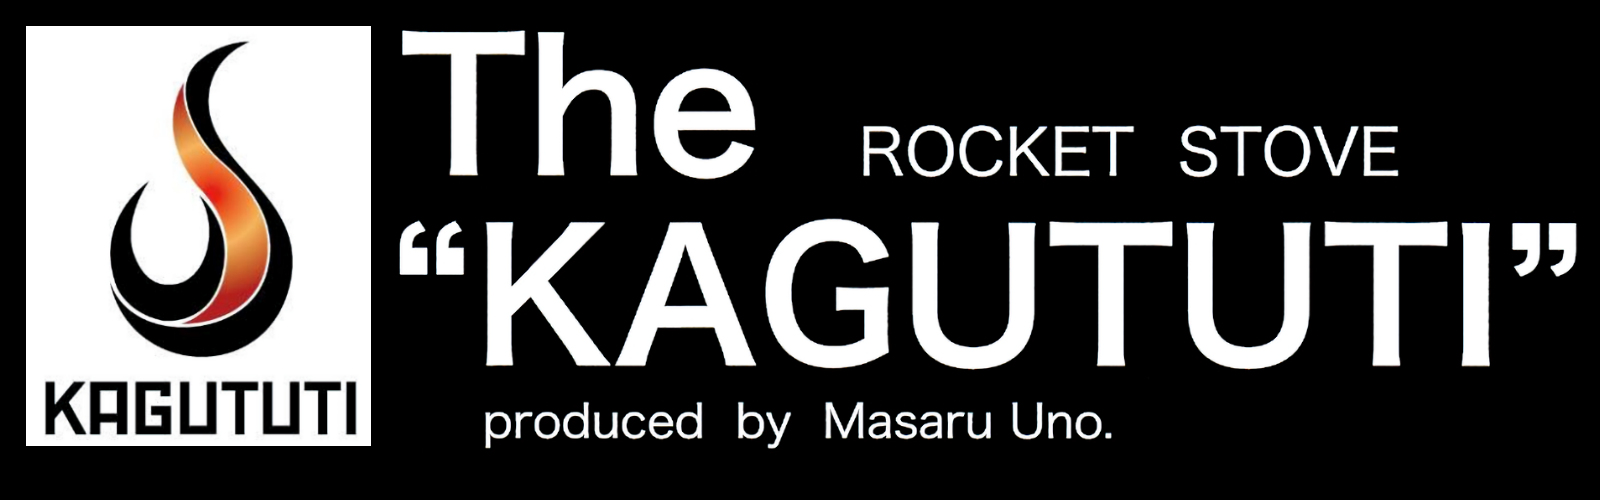 The KAGUTUTI